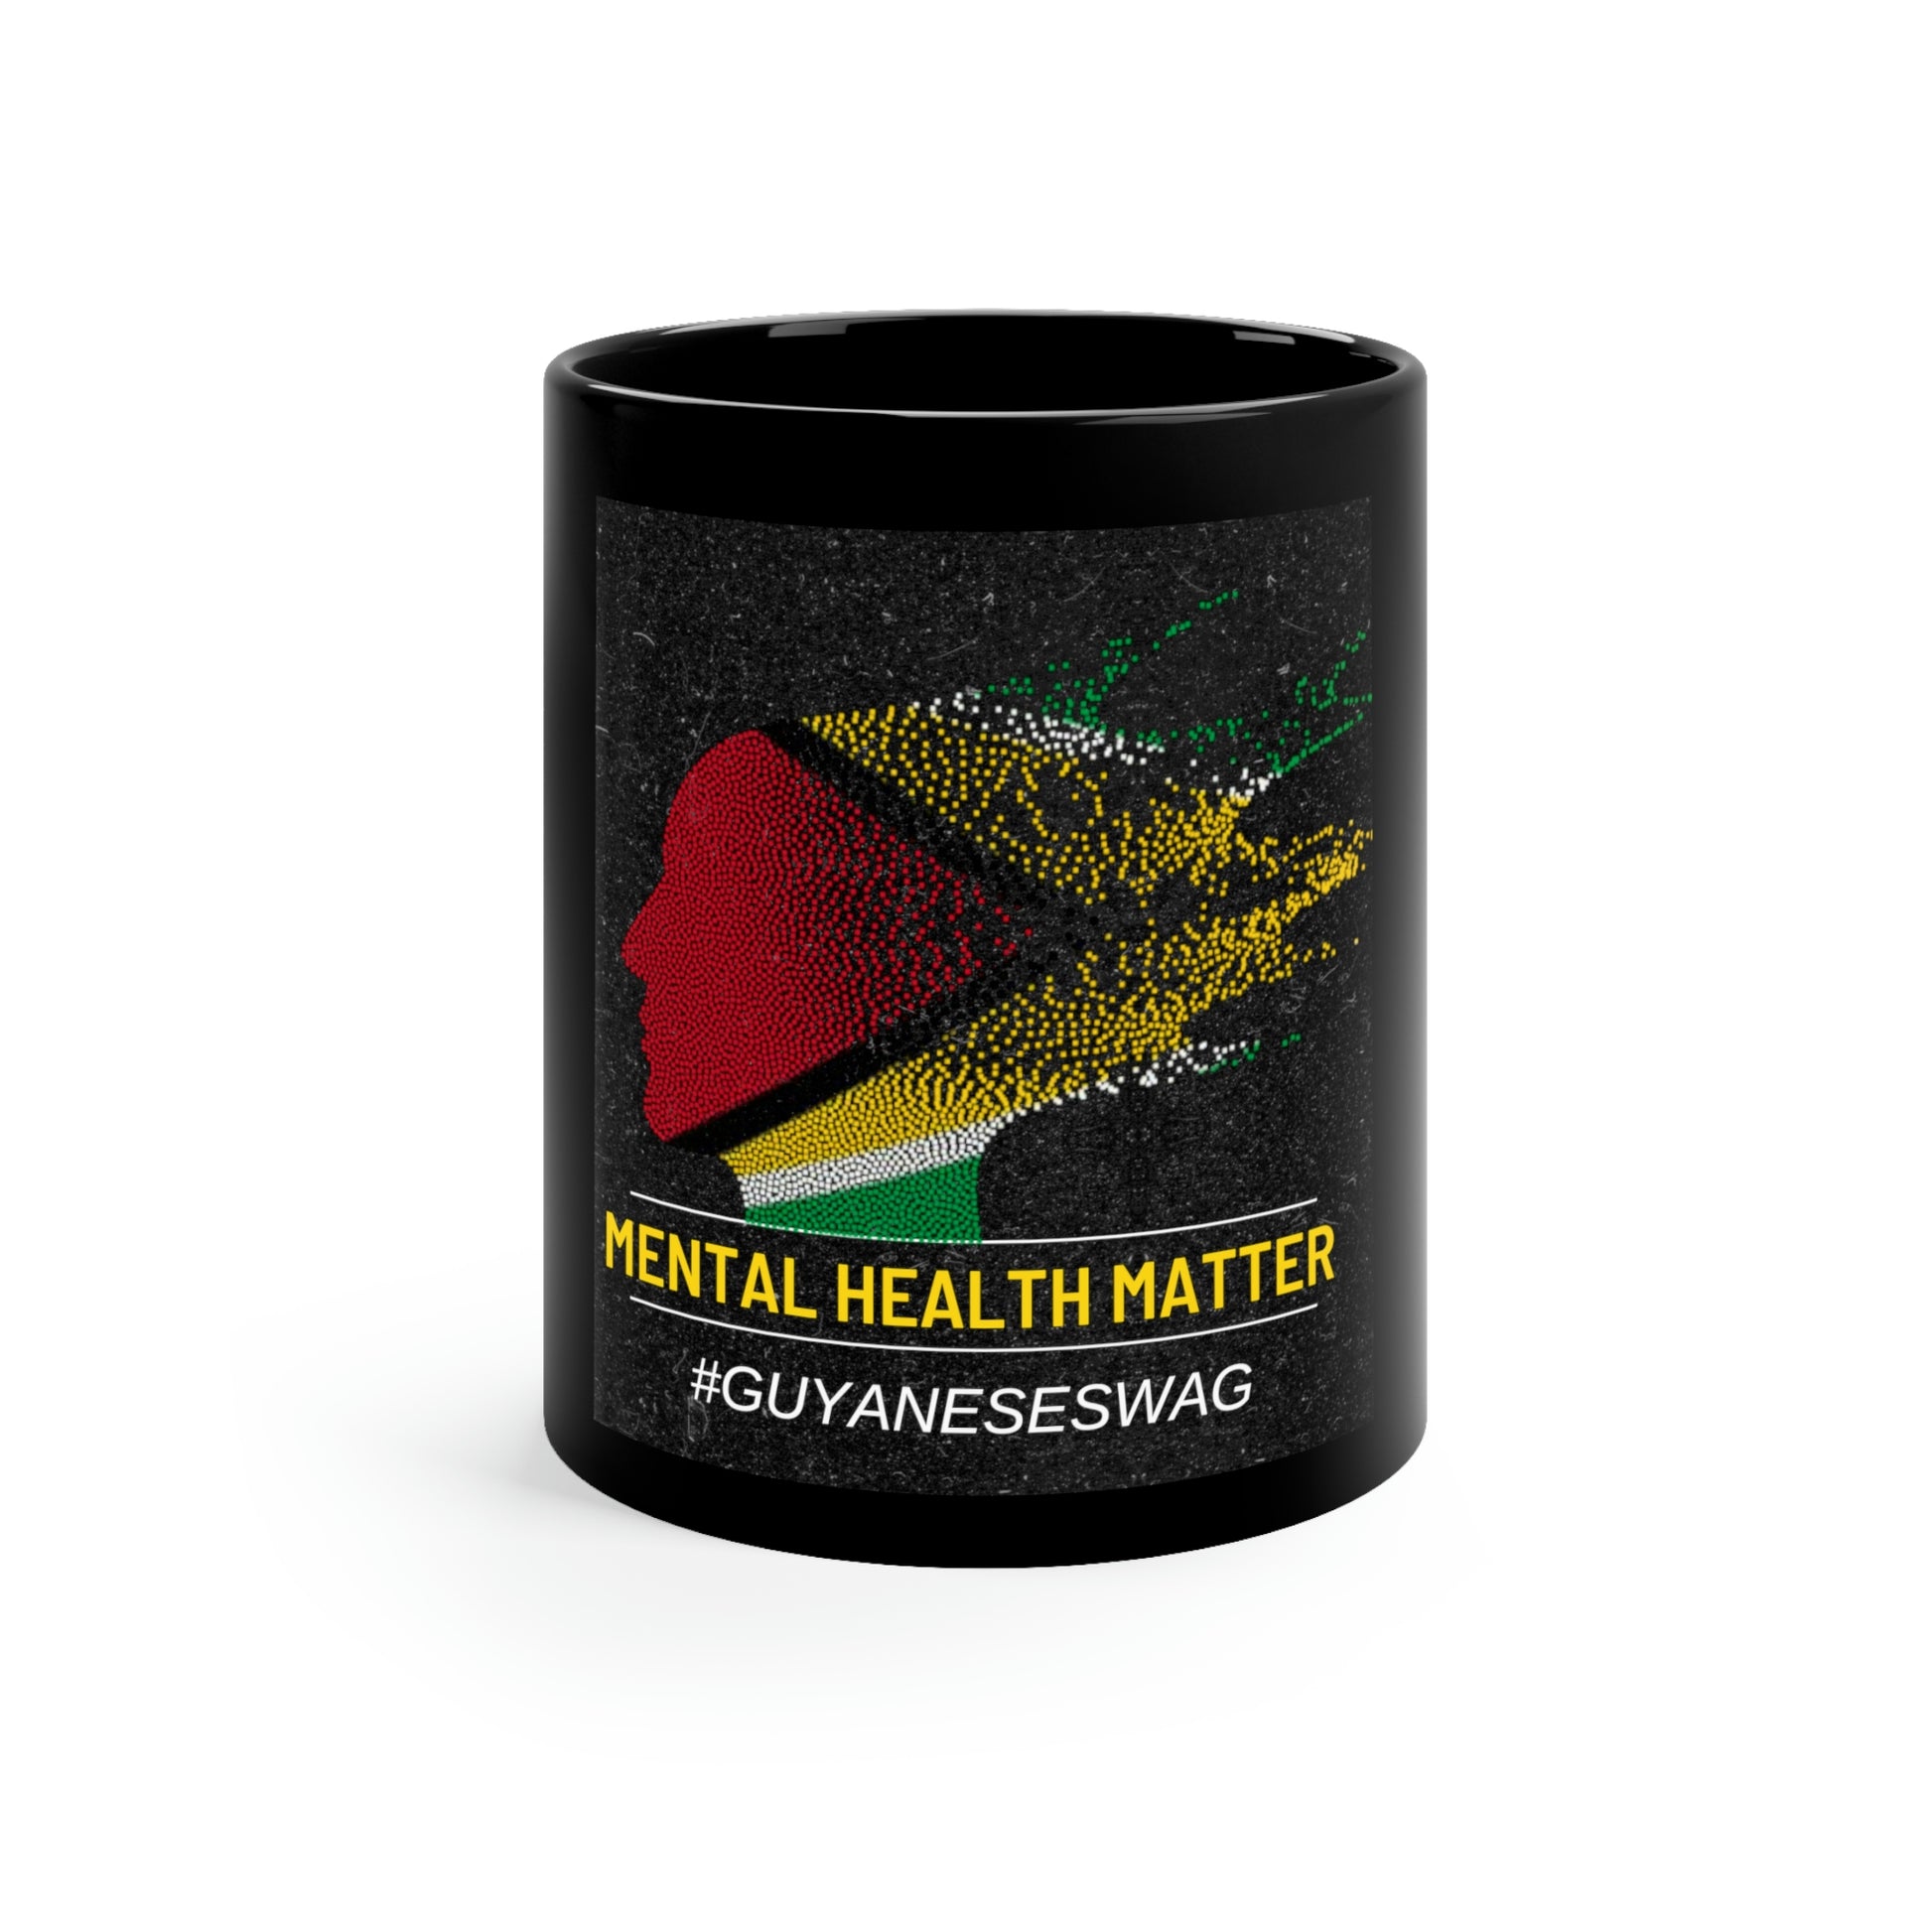 "Mental Health Matter" 11oz Black Mug by Guyanese Swag.